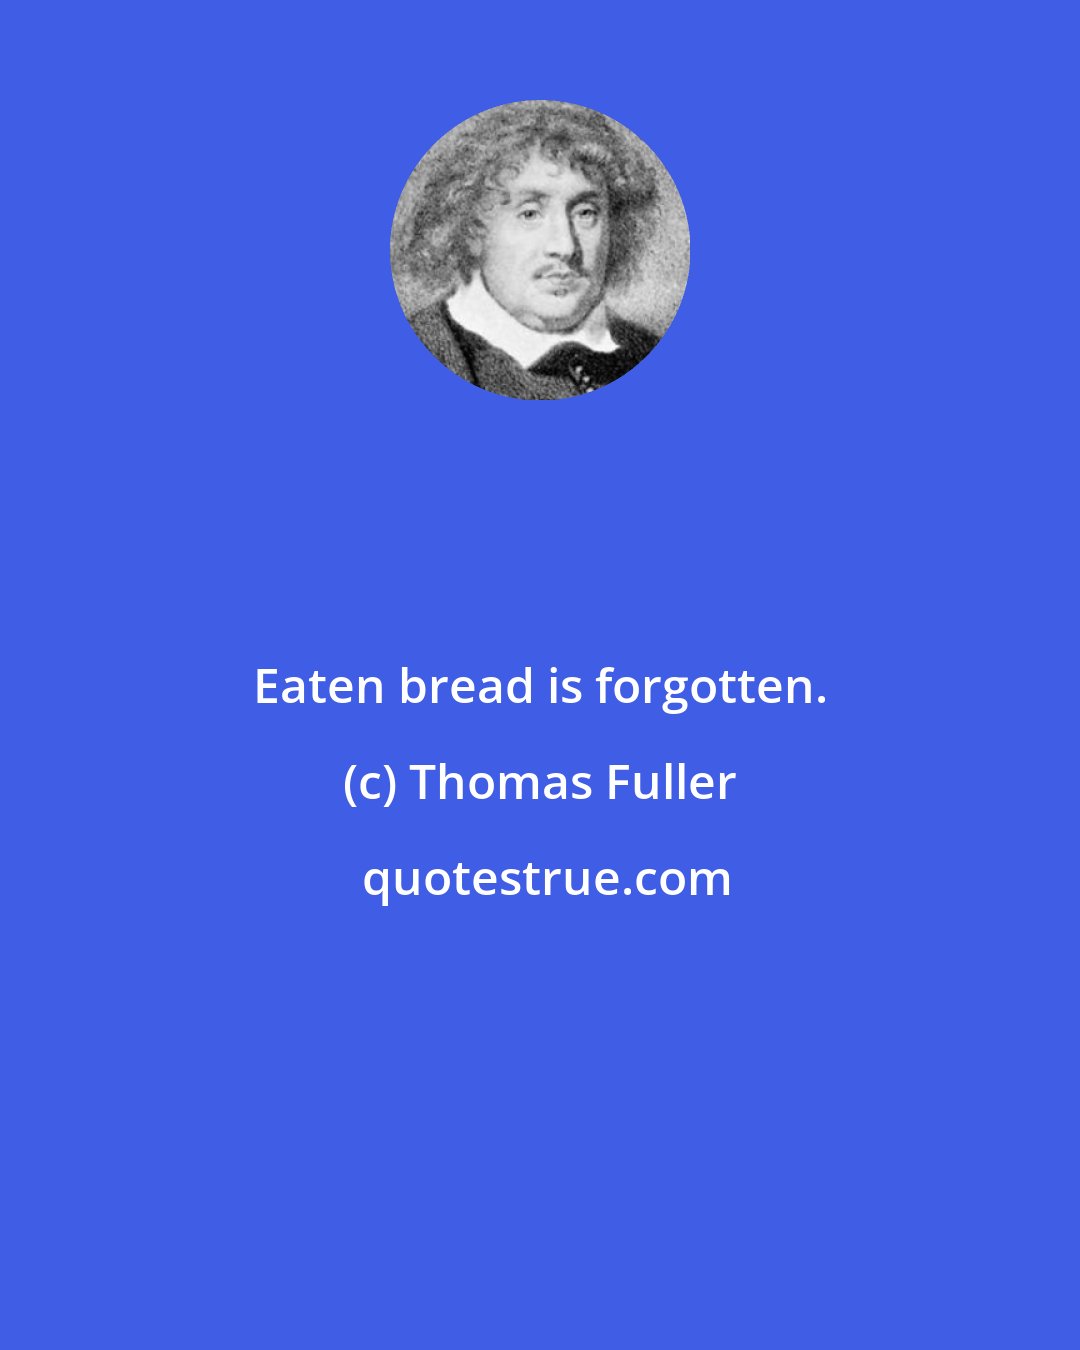 Thomas Fuller: Eaten bread is forgotten.